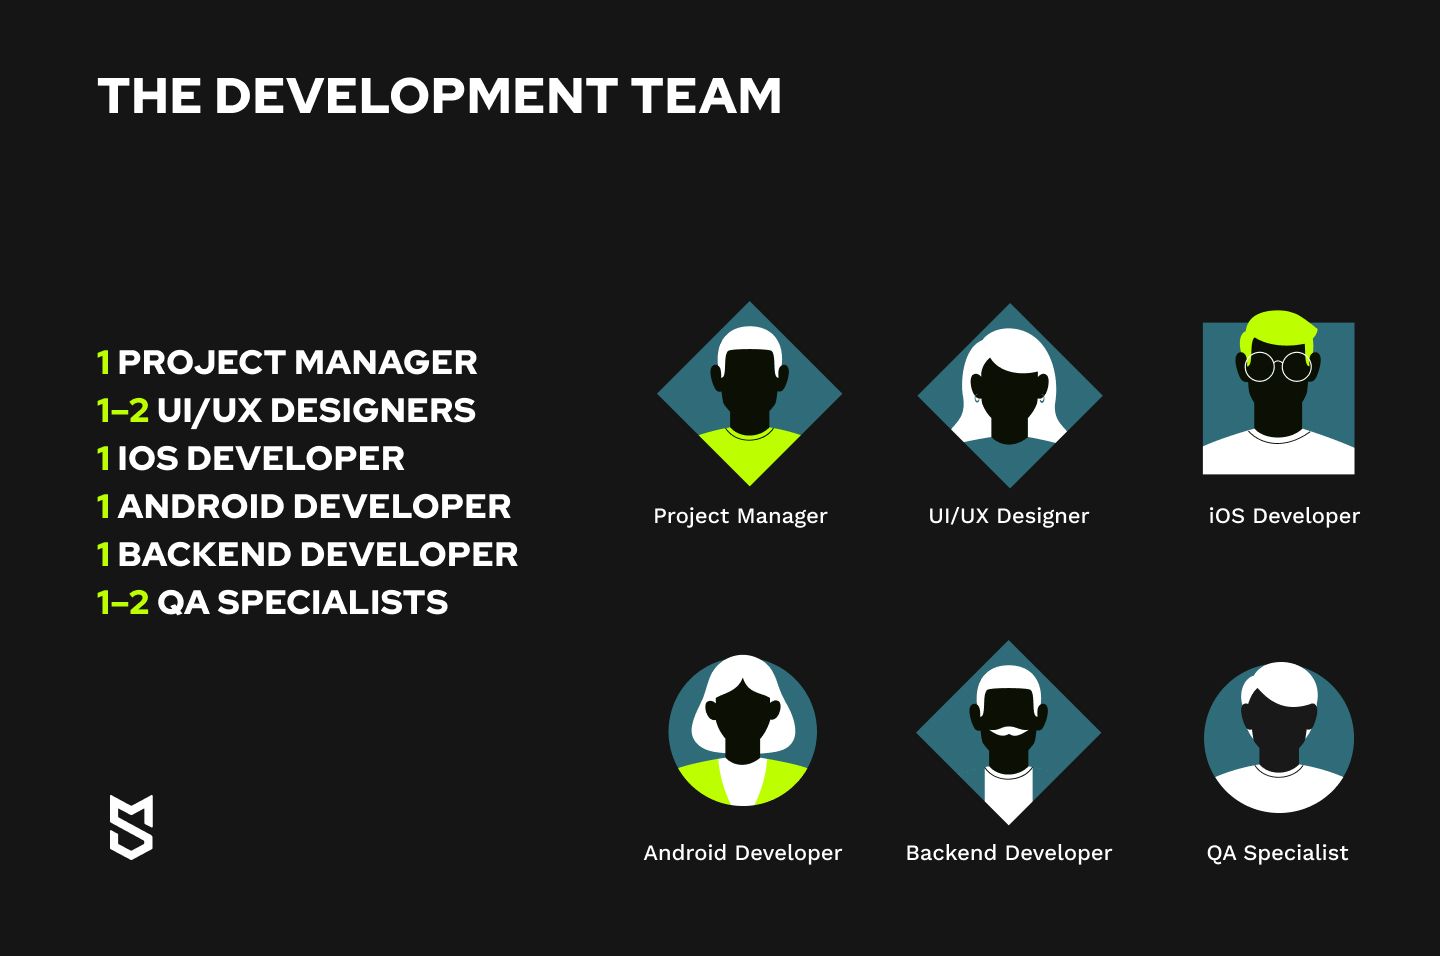 The development team